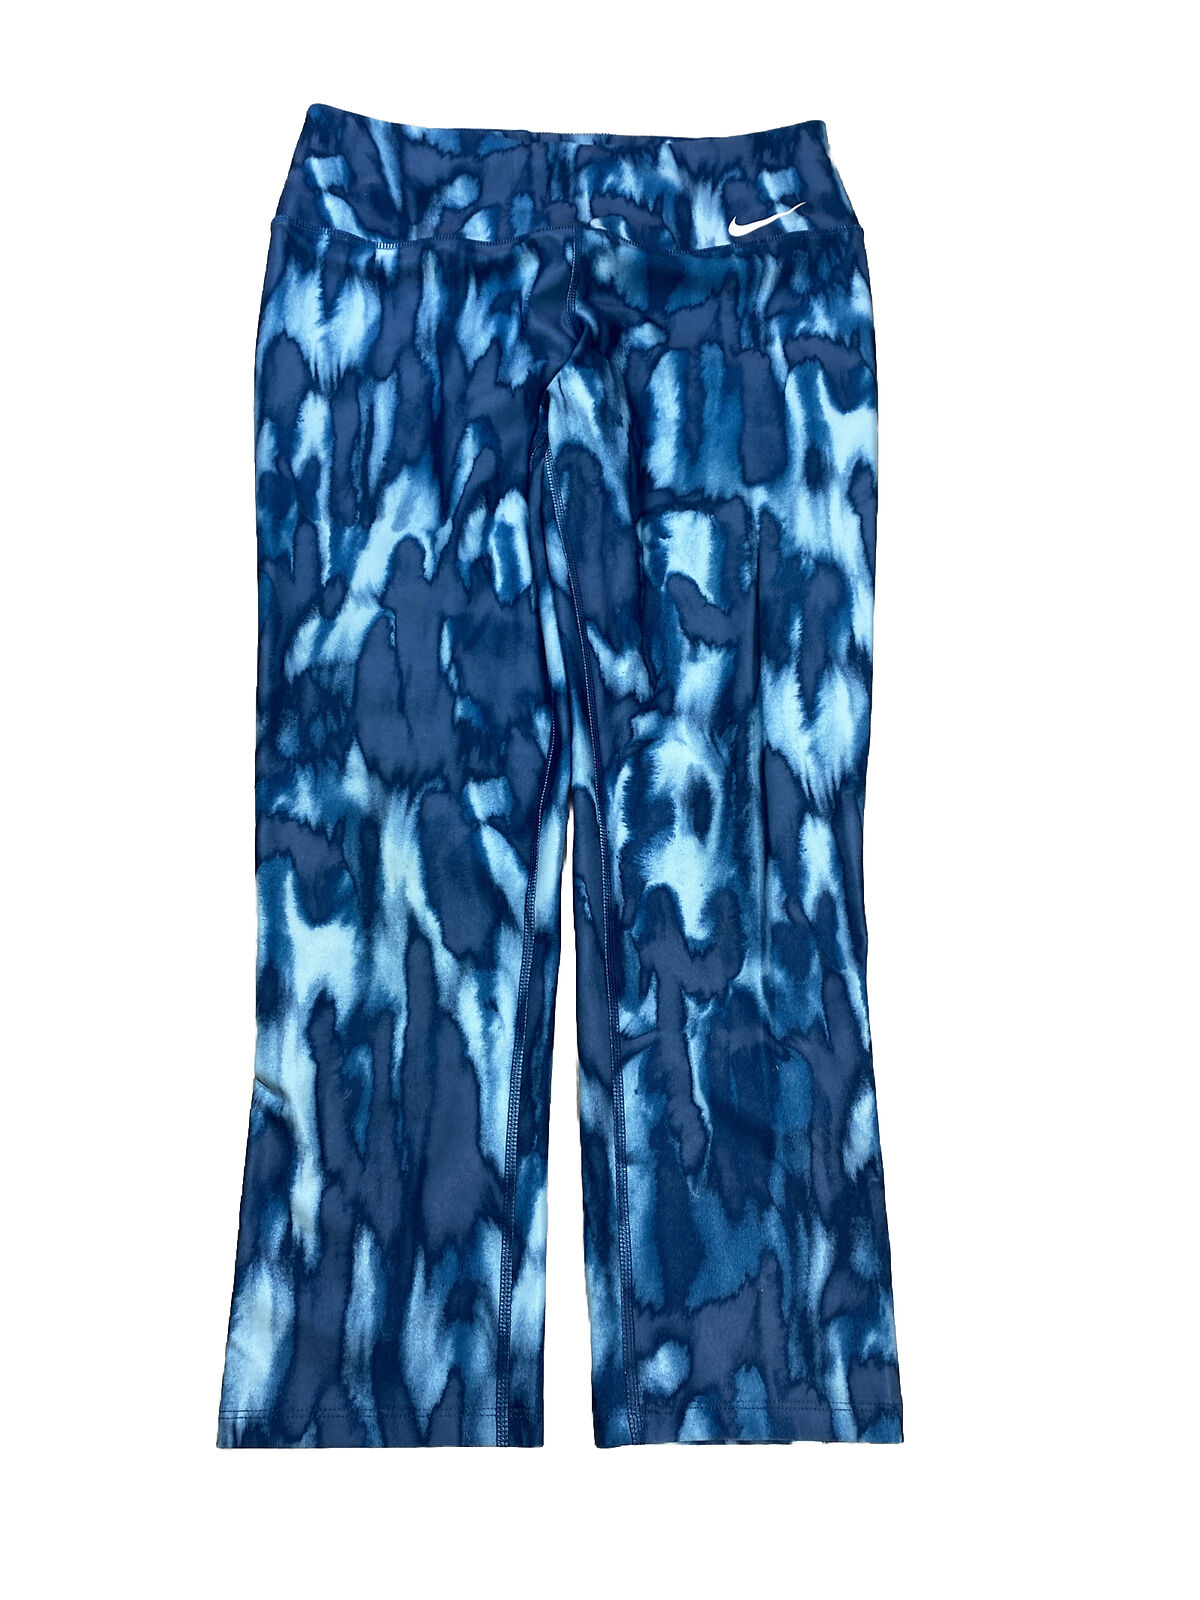 NikeLeggings capri ajustados Power Legend azules para mujer - M